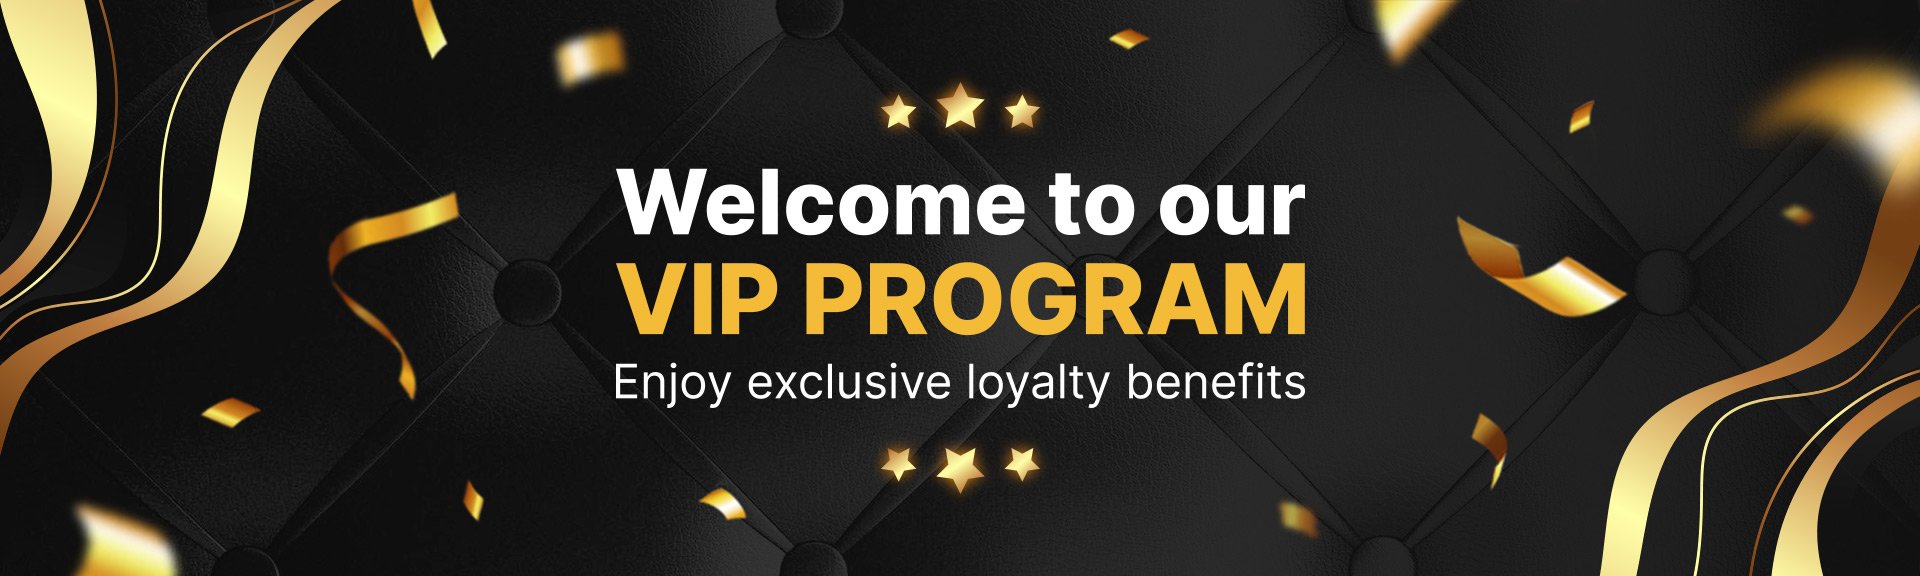 Welcome VIP program